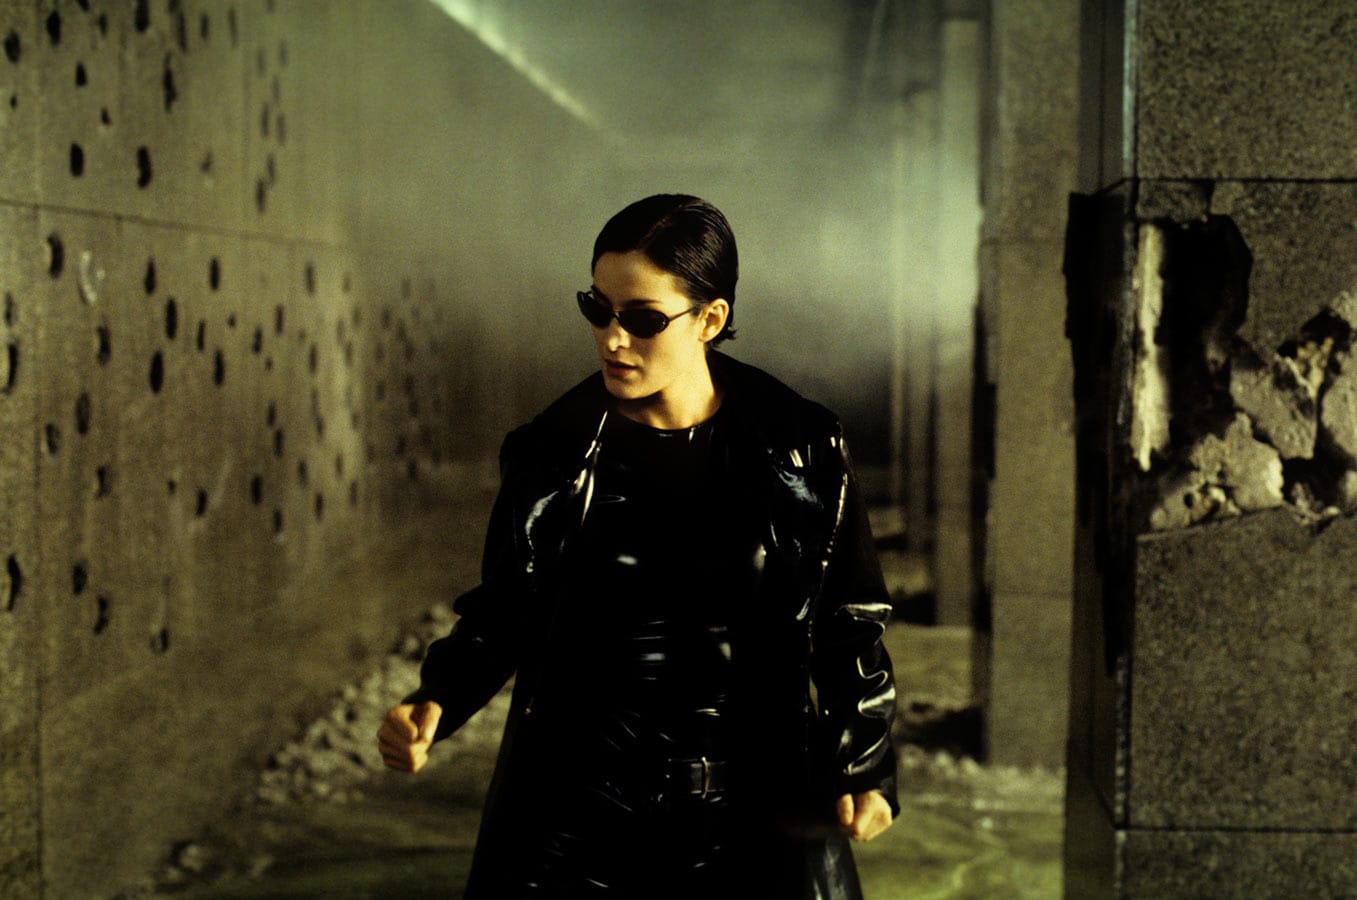 The Matrix - Jasin Boland